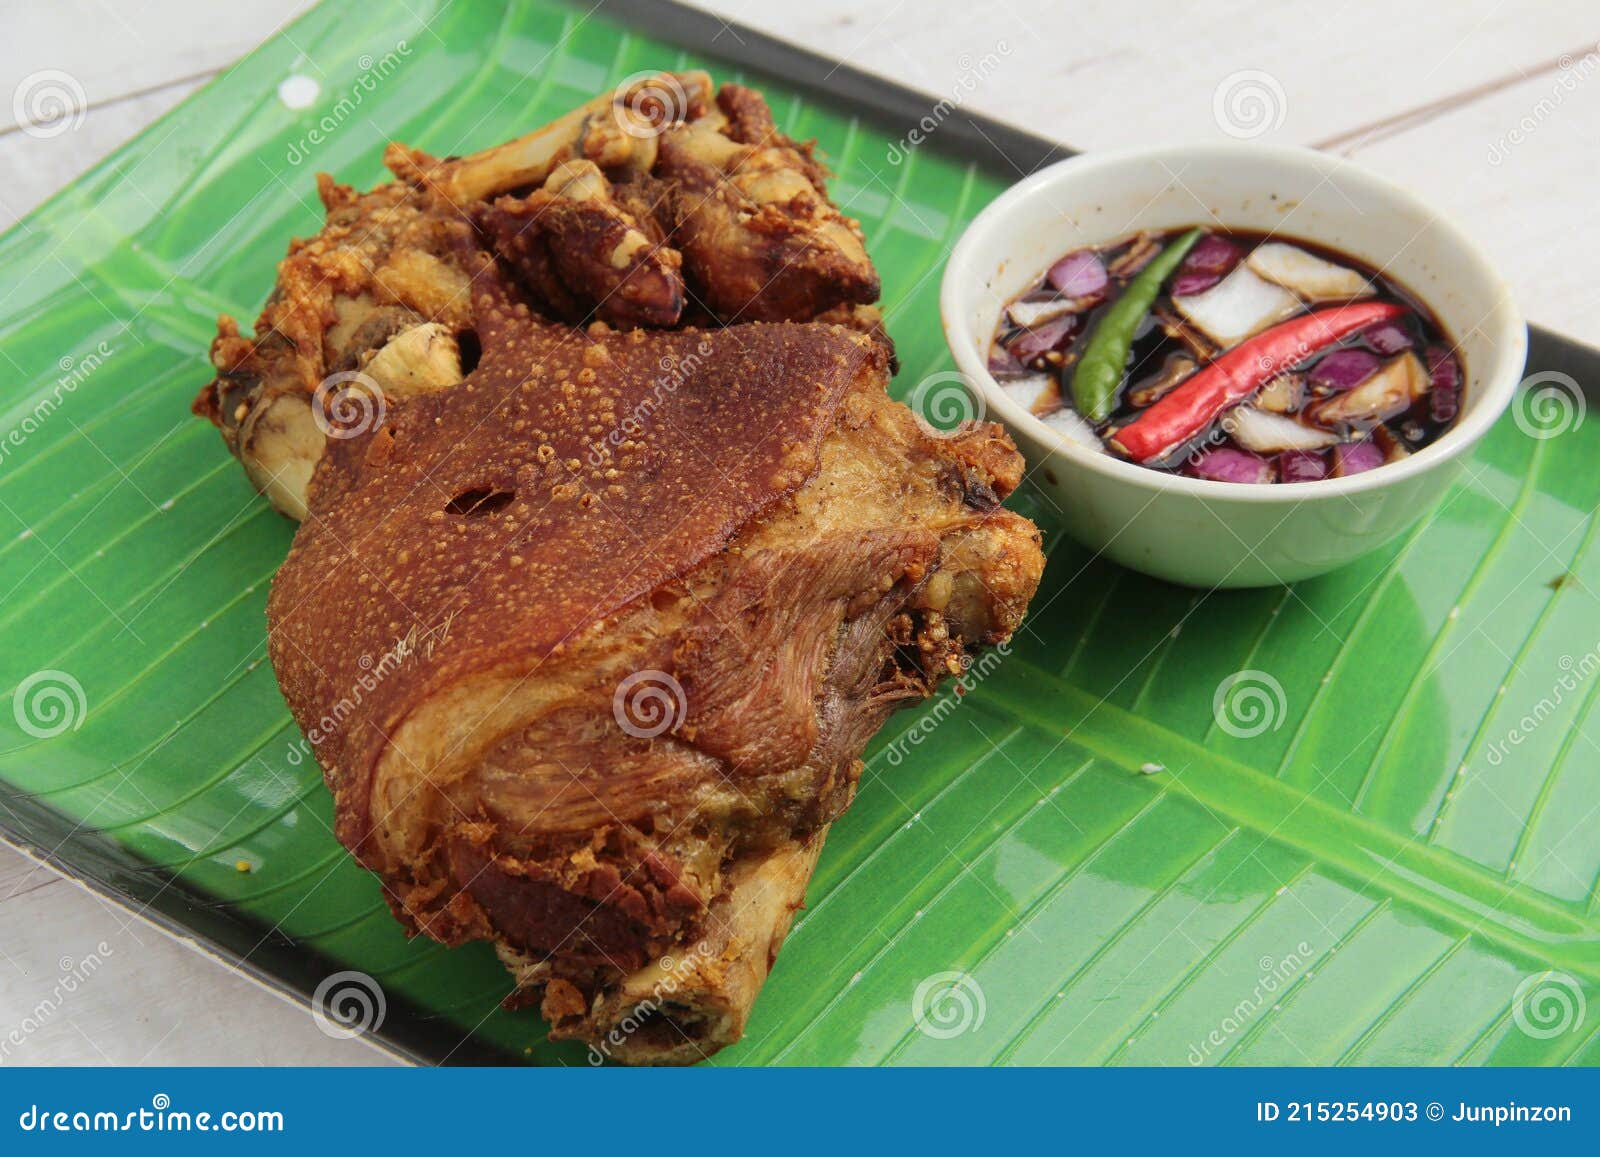 freshly cooked filipino food called crispy pata or deep fried crispy pork leg